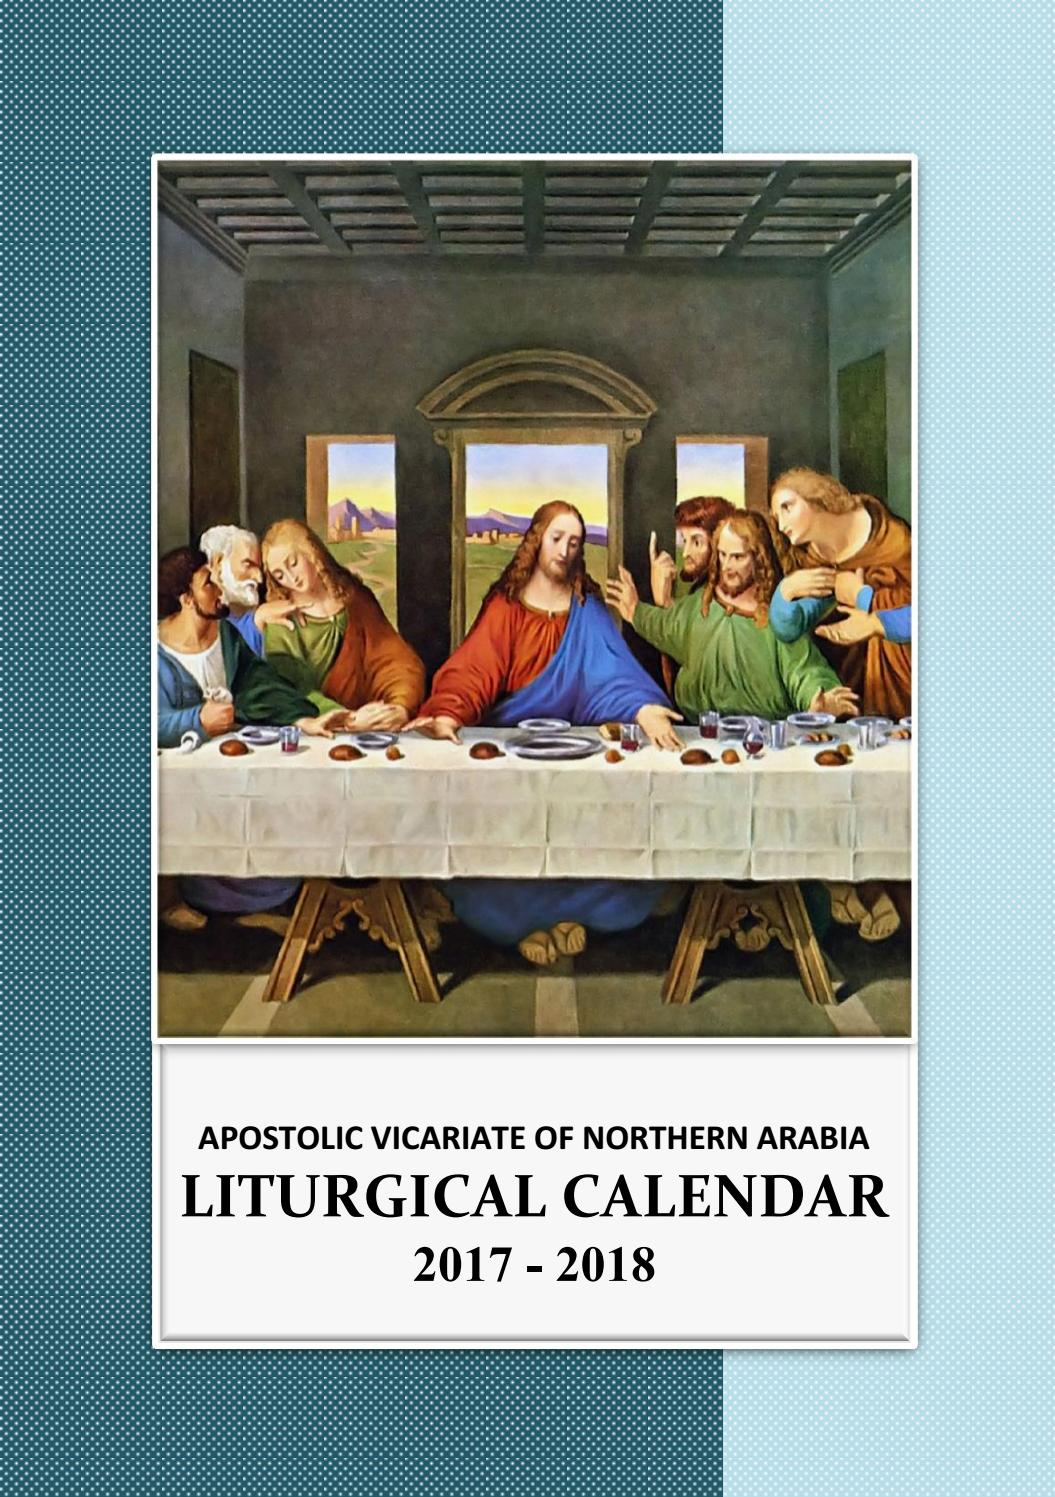 Avona Liturgical Calendar 2018 By Avona  Issuu regarding Liturgical Calendar Poster